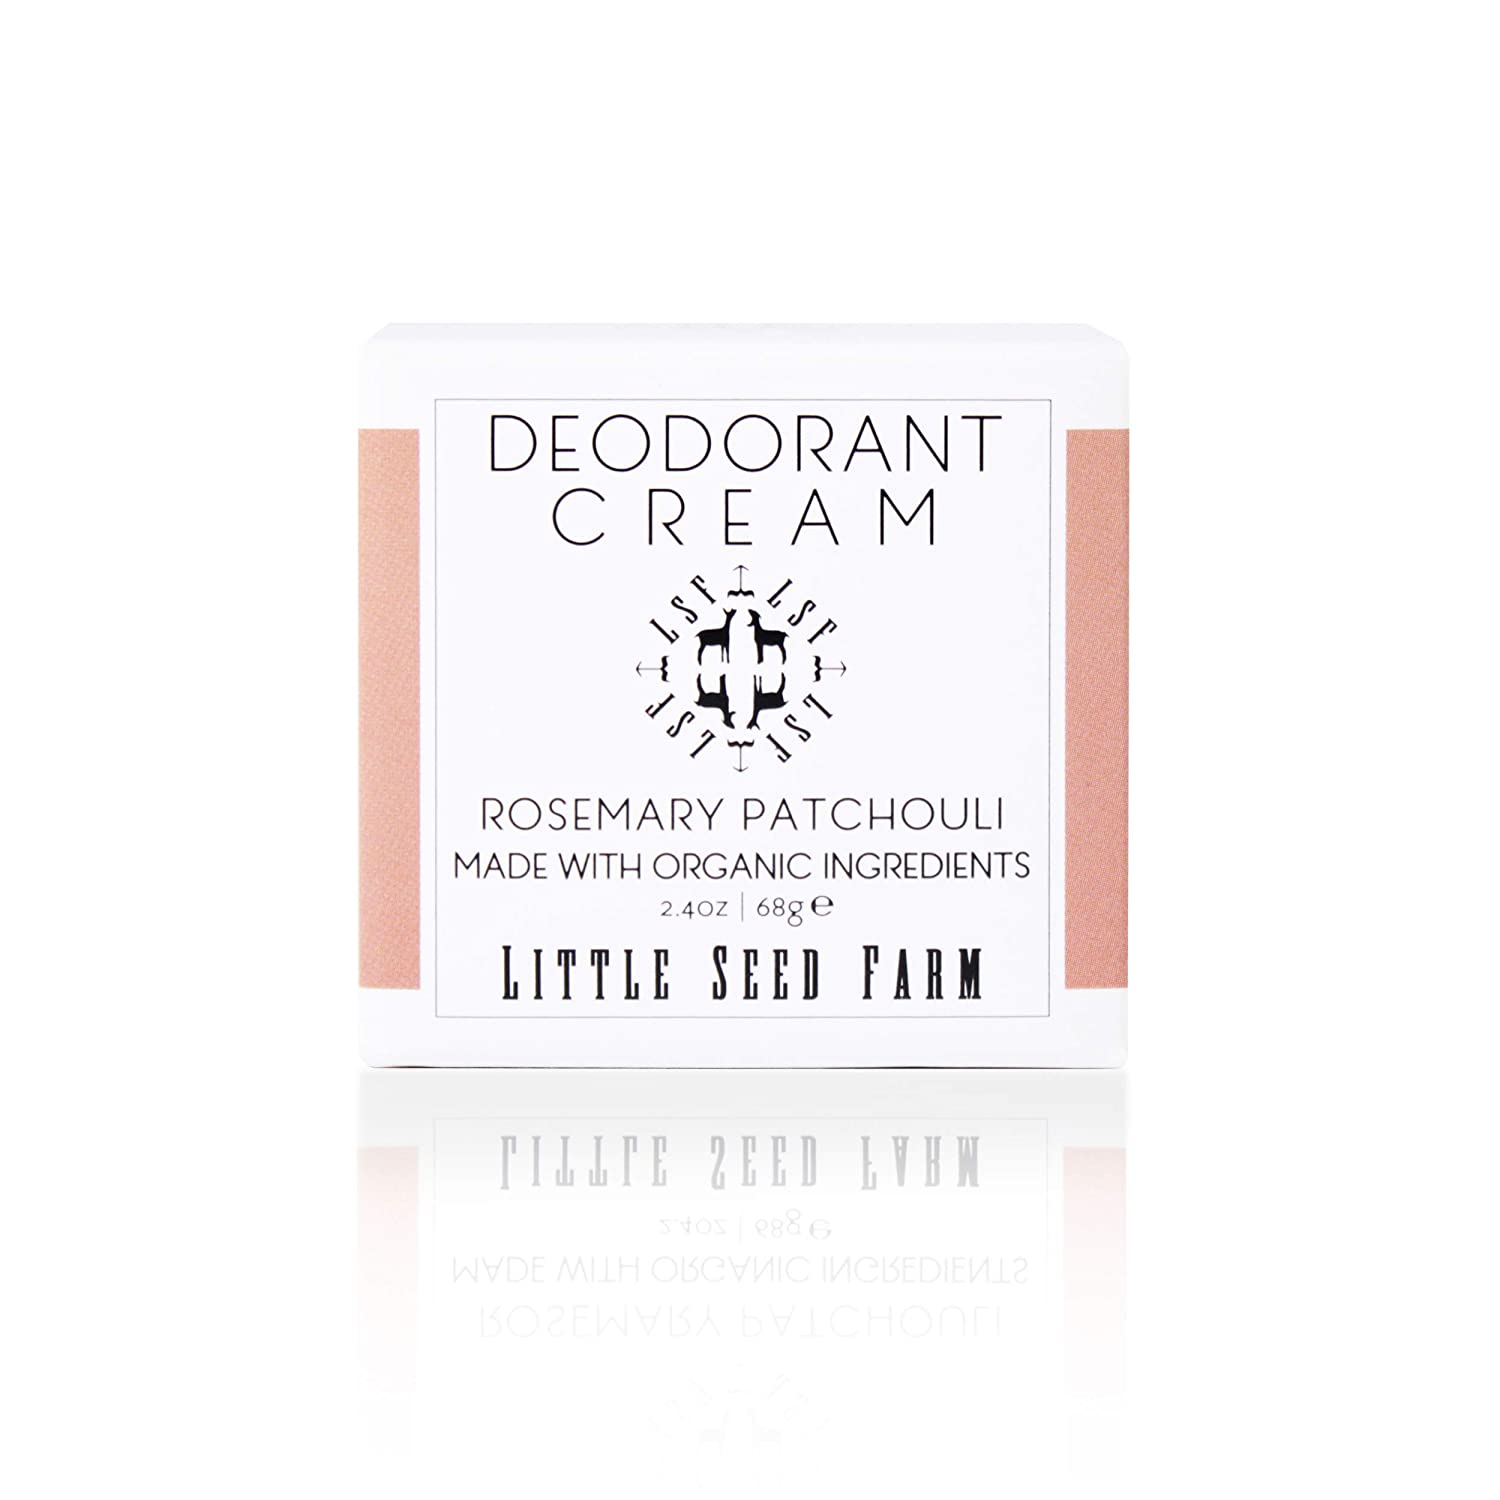 Rosemary Patchouli Deodorant Cream